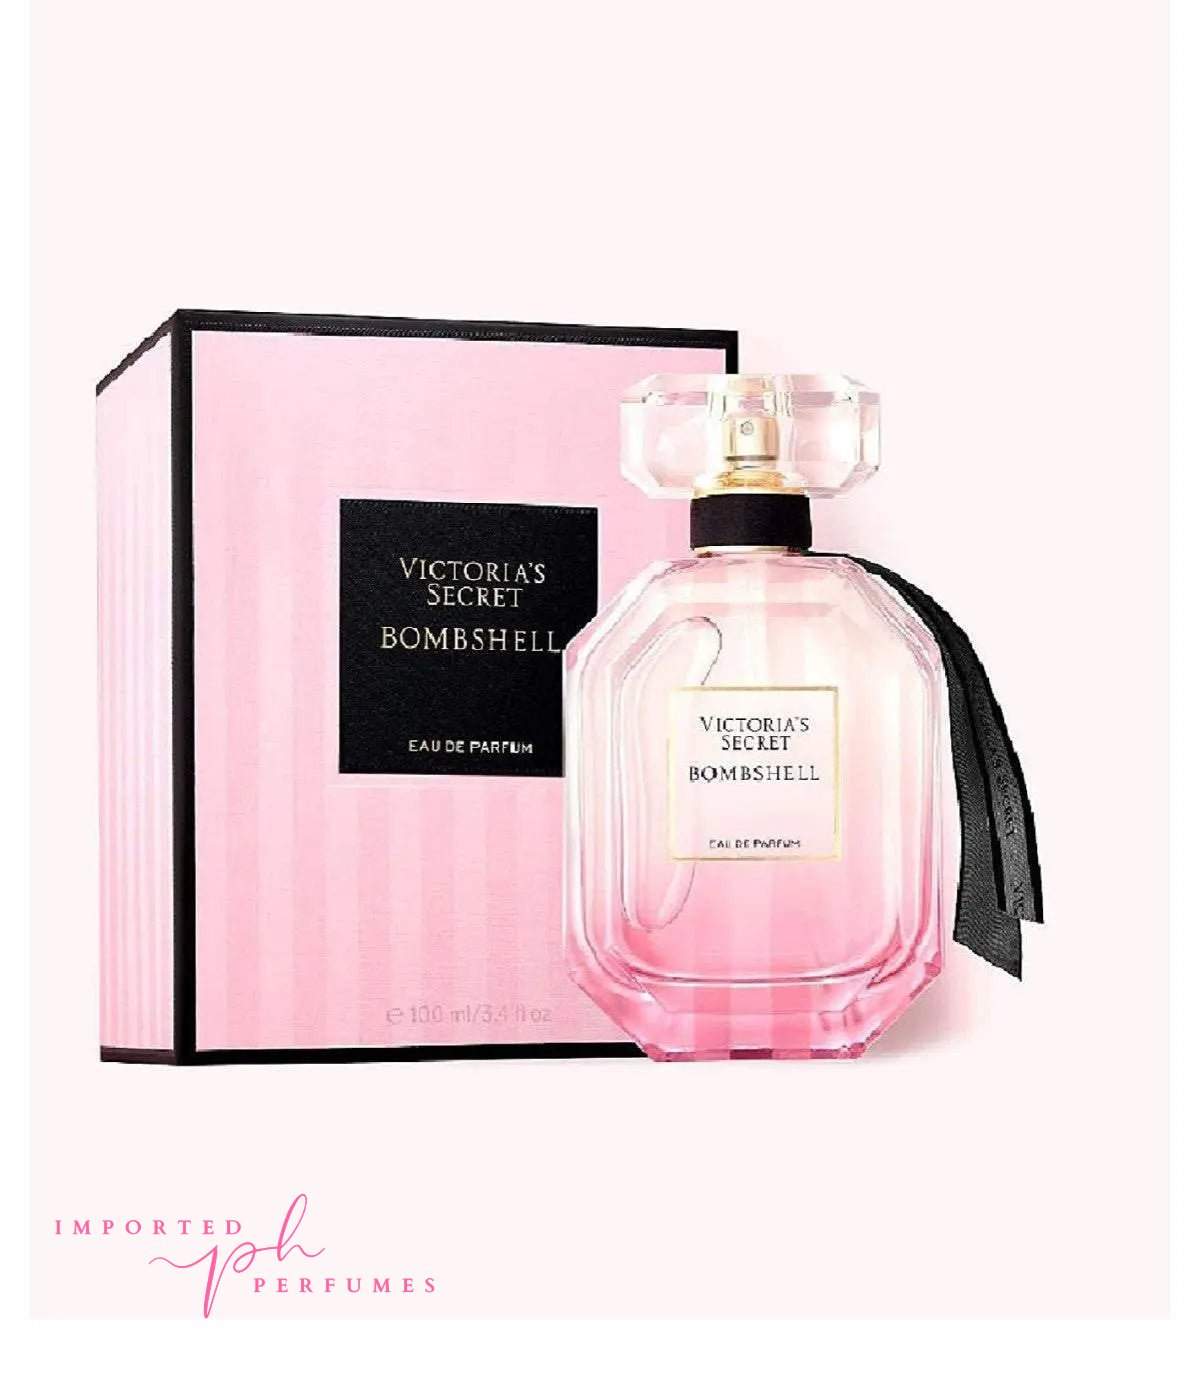 [TESTER] Bombshell Victoria's Secret For Women 100ml Eau De Parfum-Imported Perfumes Co-100ml,bomb,shell,TESTER,Victoria Secret,women